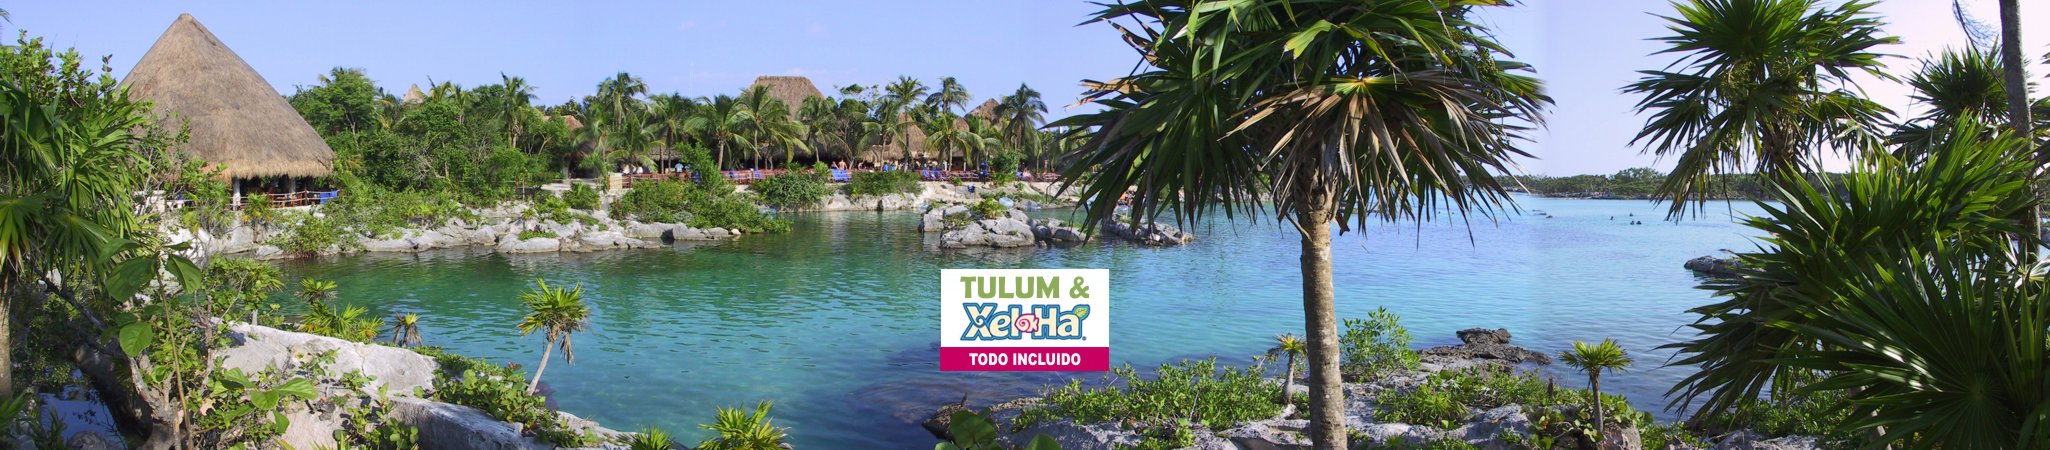 Paseo a Tulum economico con transporte de Cancun